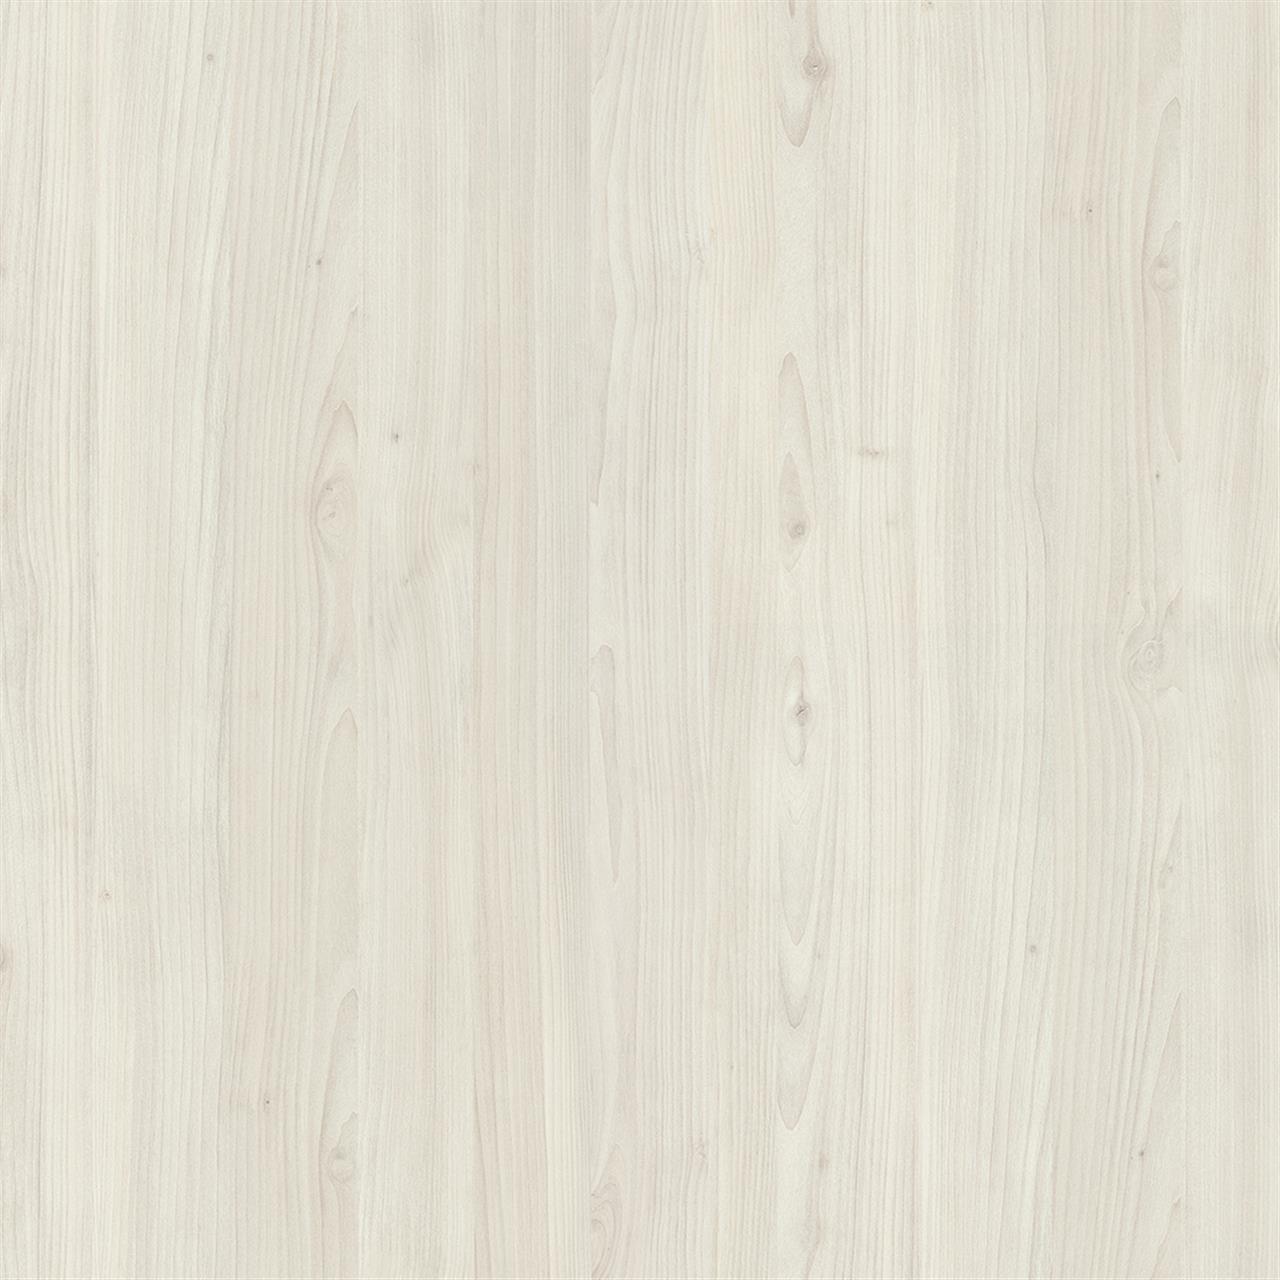 Poza Pal White Nordic Wood .Pure Wood - k088pw [1]